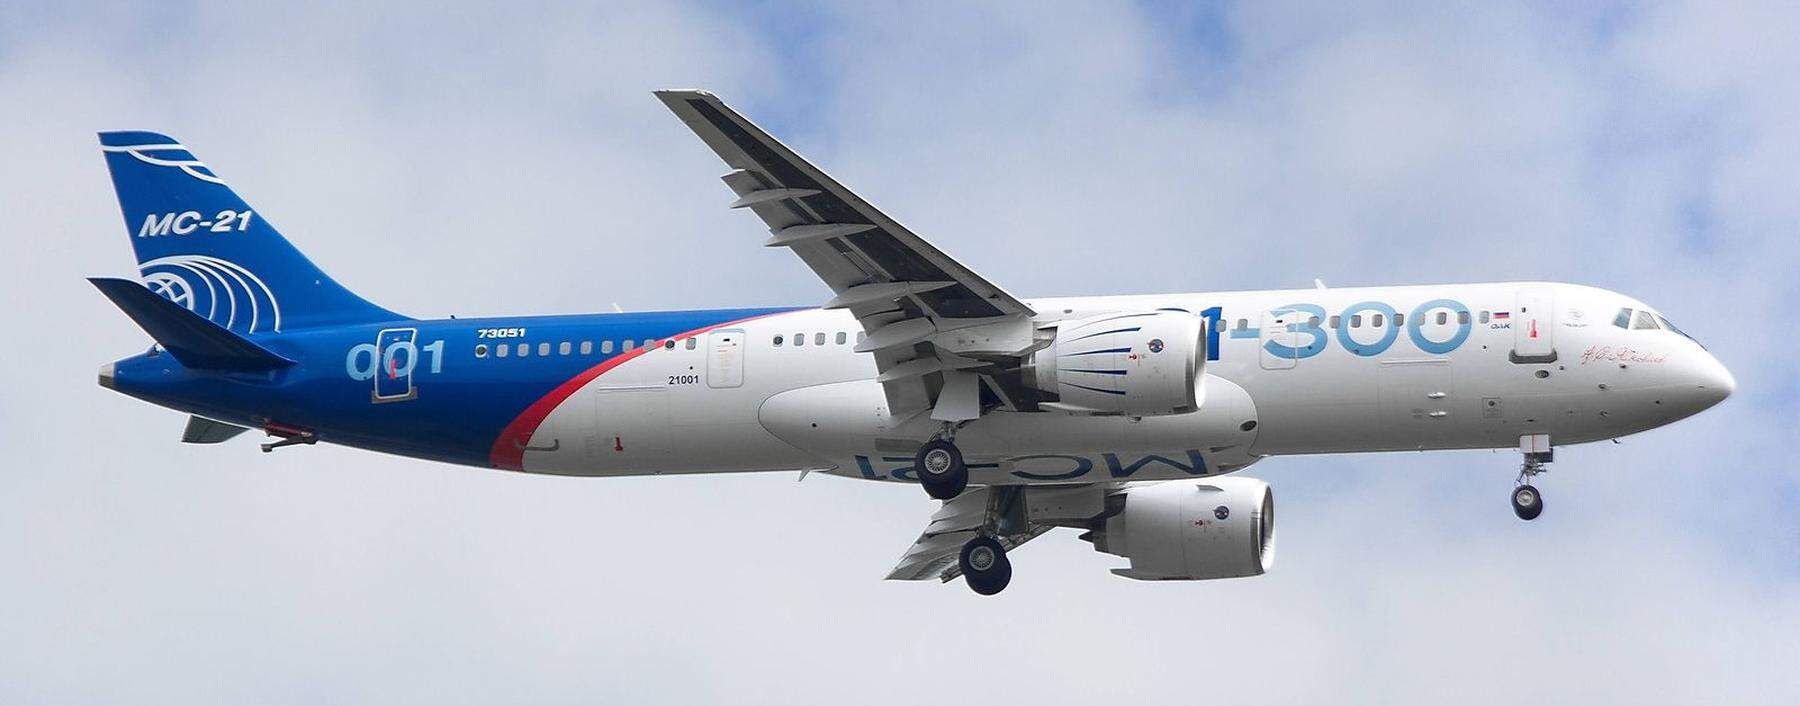 Russian Prime Minister Medvedev attends ceremony to present Irkut MC-21 jet airliner in Irkutsk